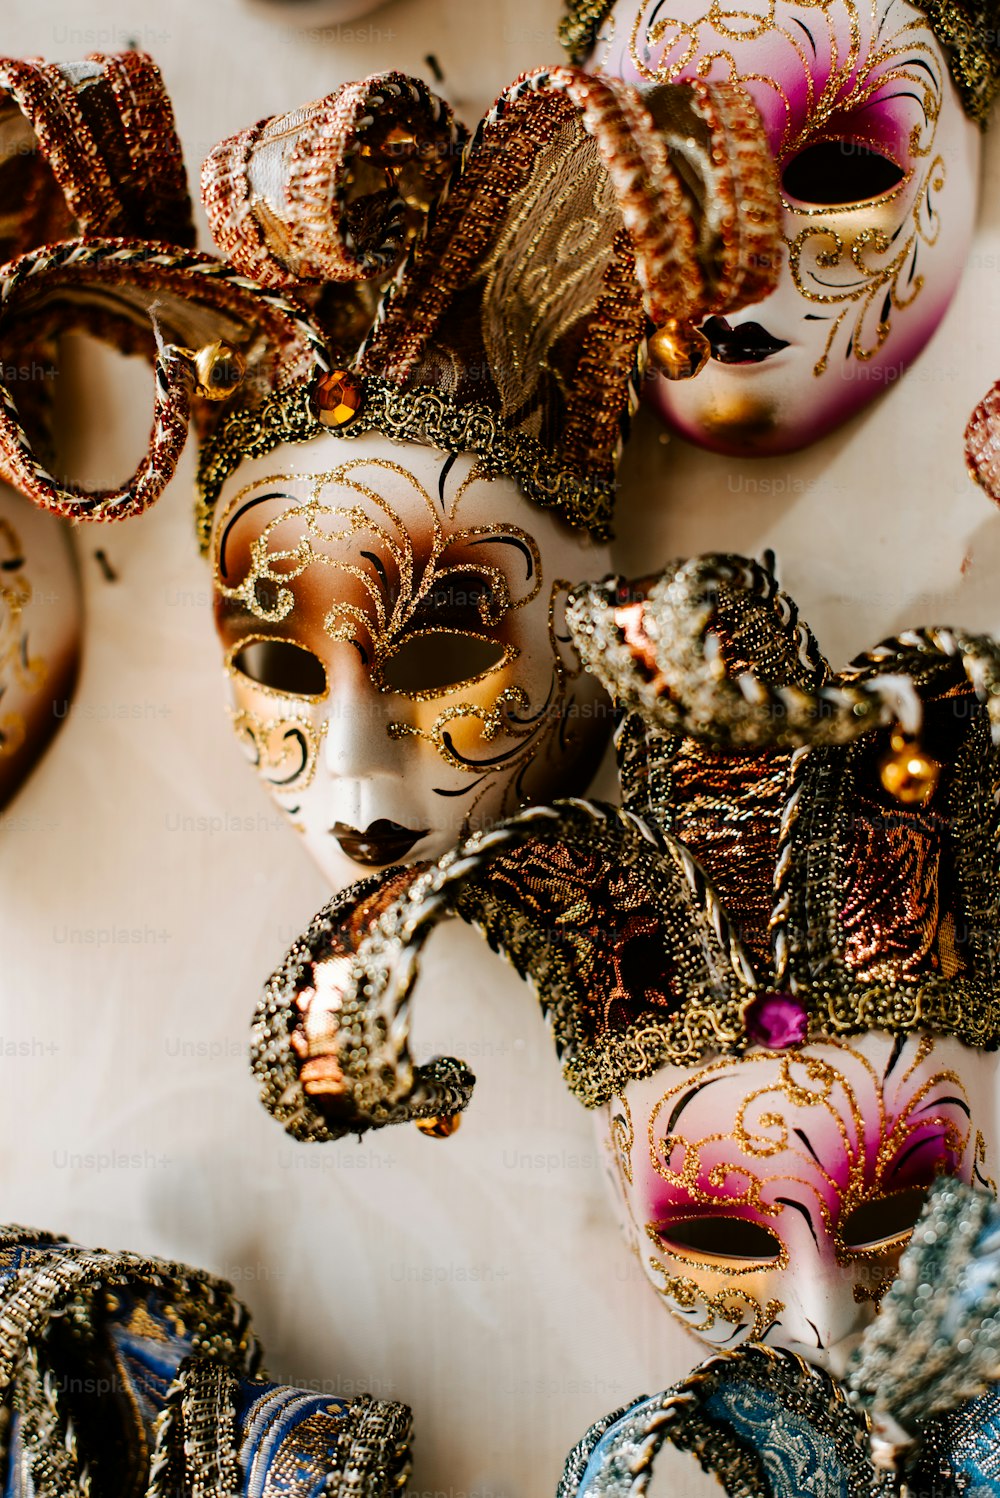 19.922 fotos e imágenes de Mascara Carnaval - Getty Images